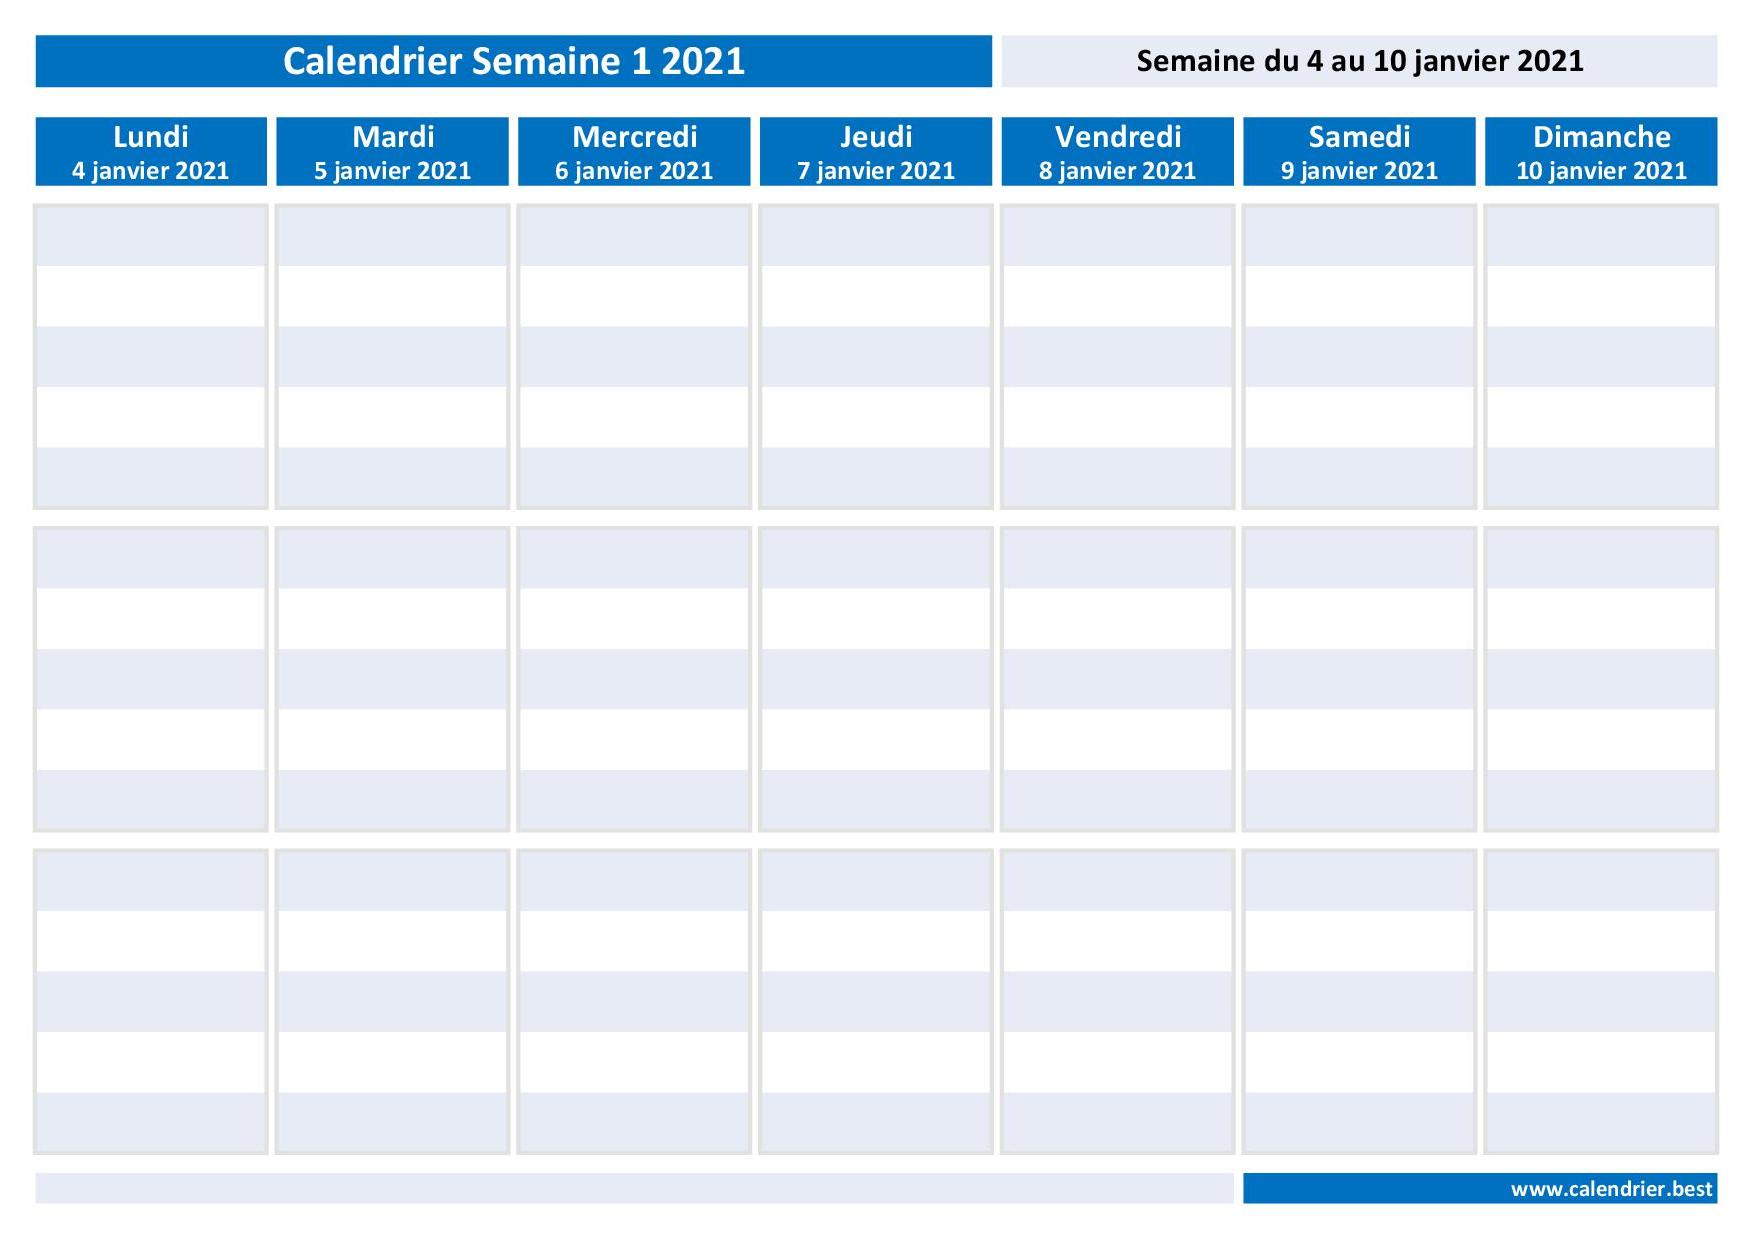 Semaine 1 2021 Dates Calendrier Et Planning Hebdomadaire A Imprimer